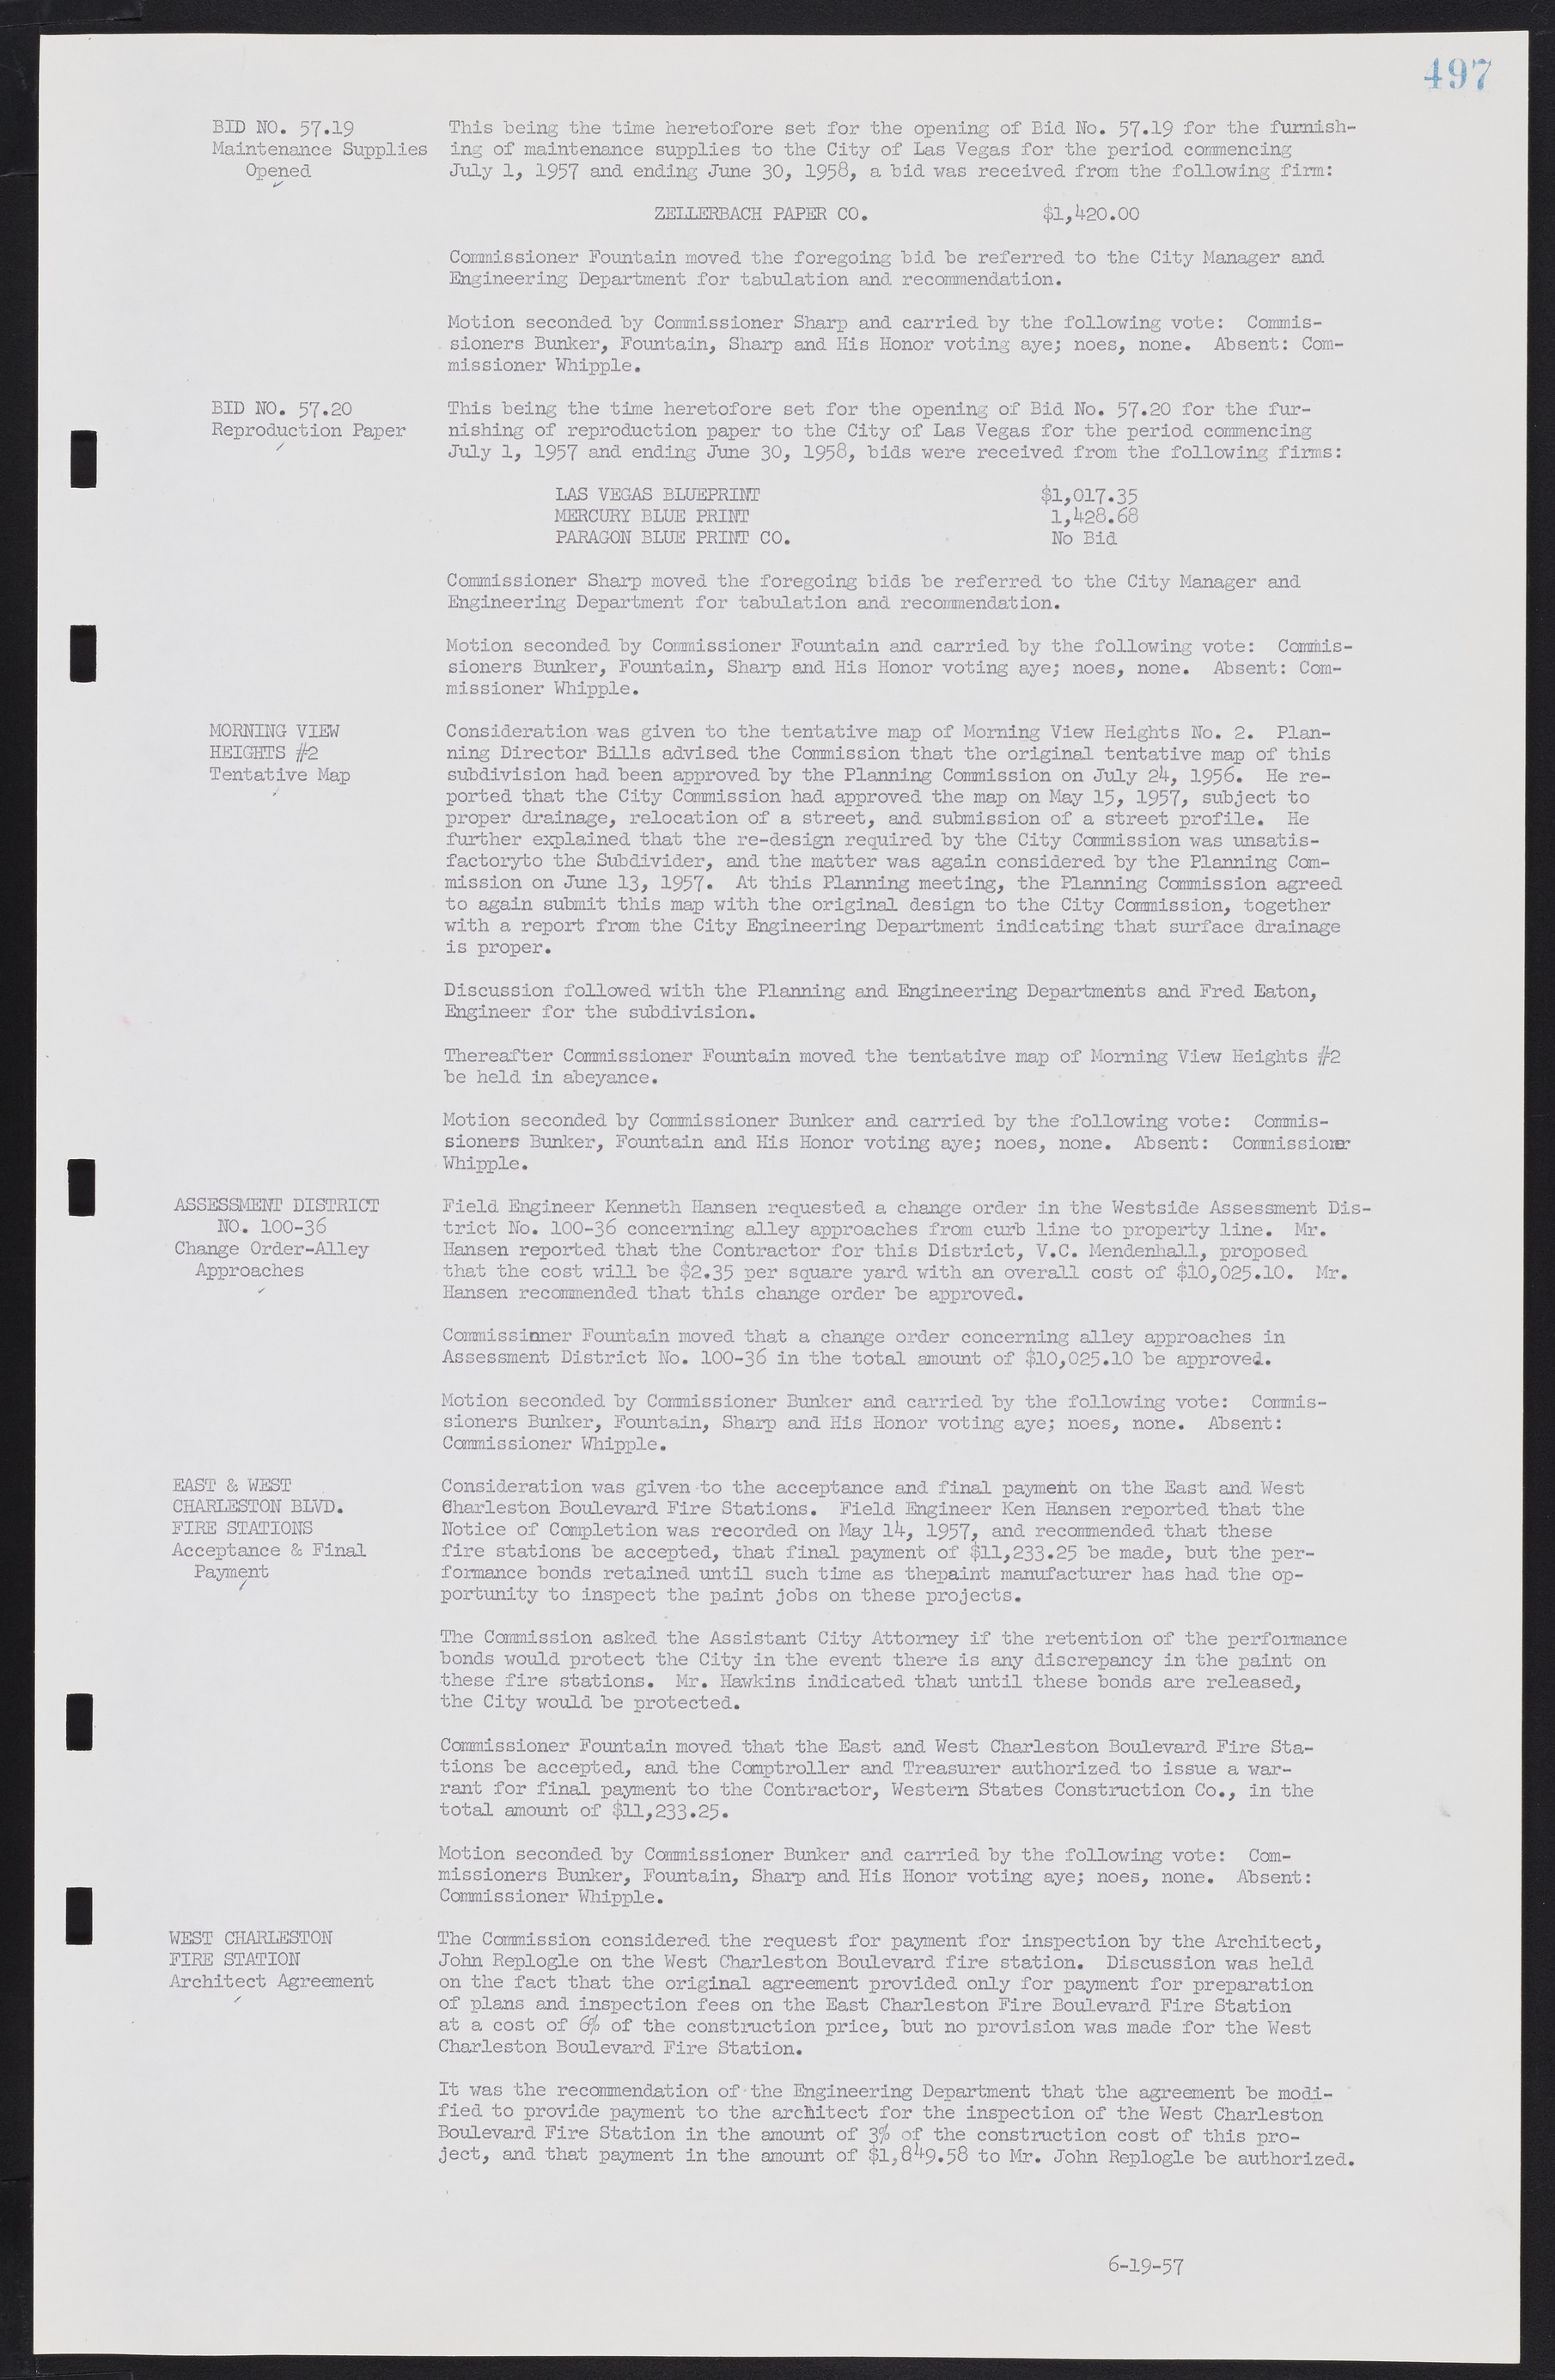 Las Vegas City Commission Minutes, September 21, 1955 to November 20, 1957, lvc000010-517